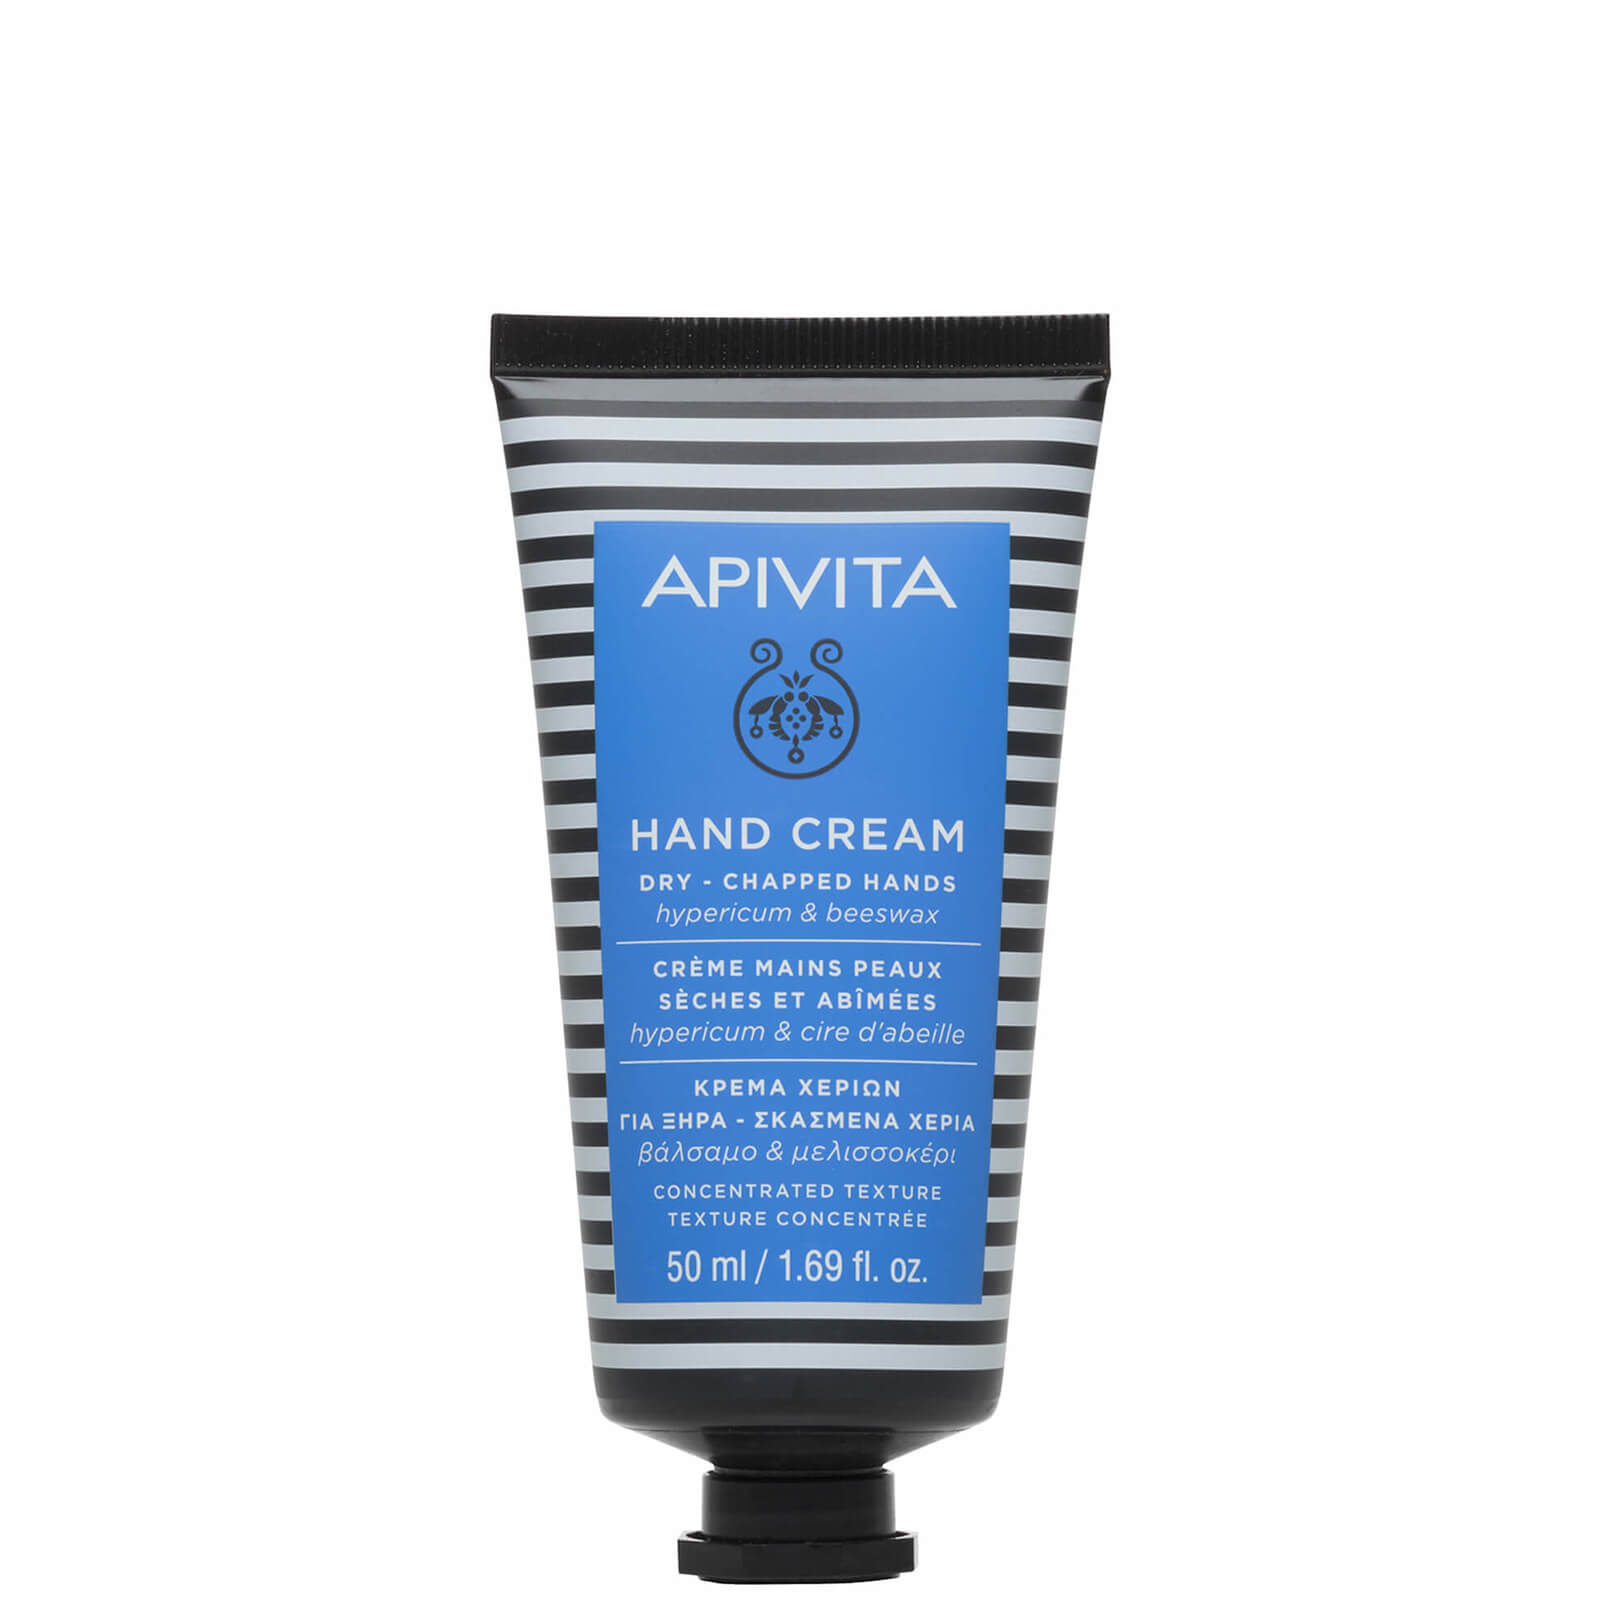 APIVITA Hand Care Hand Cream for Dry Chapped Hands - Hypericum & Beeswax 50ml